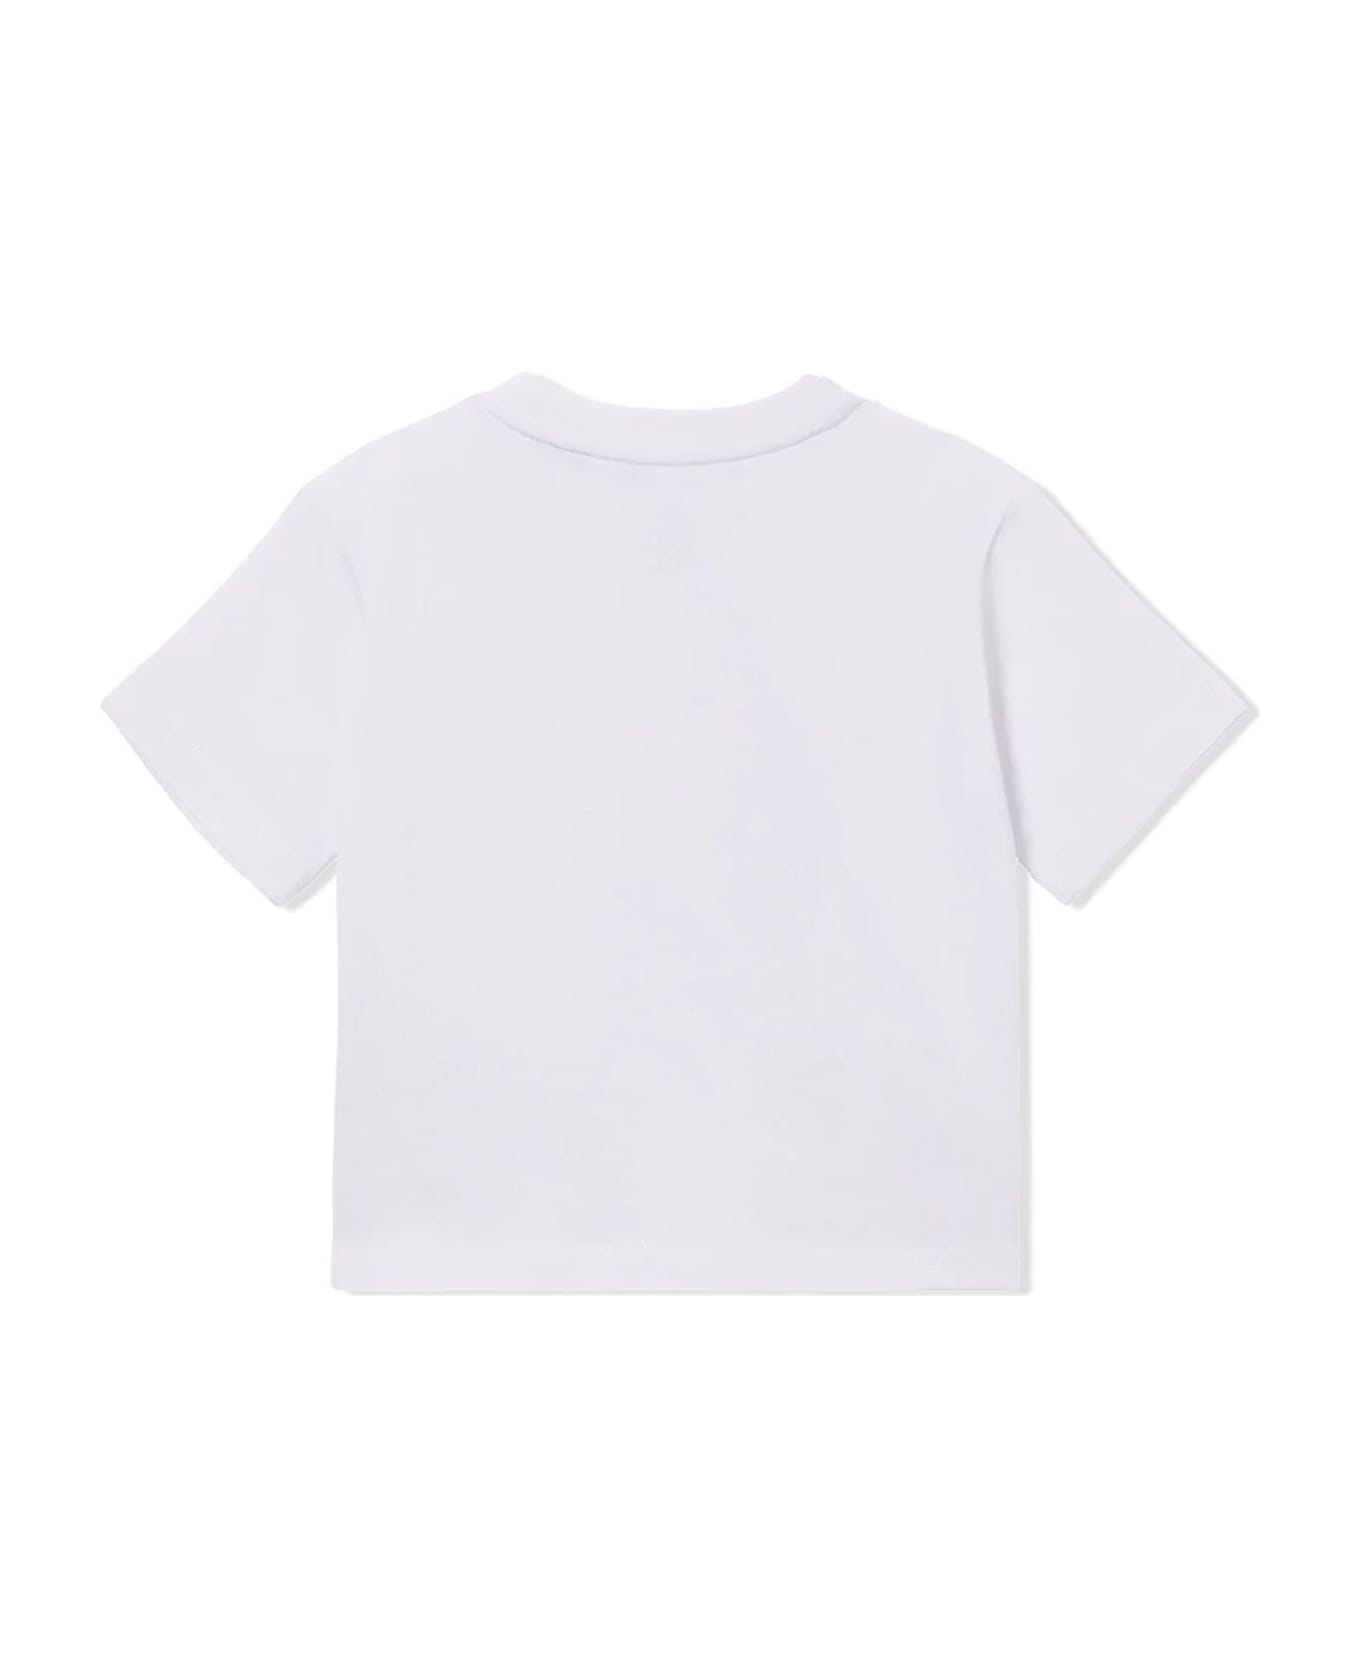 Burberry White Cotton T-shirt - Bianco